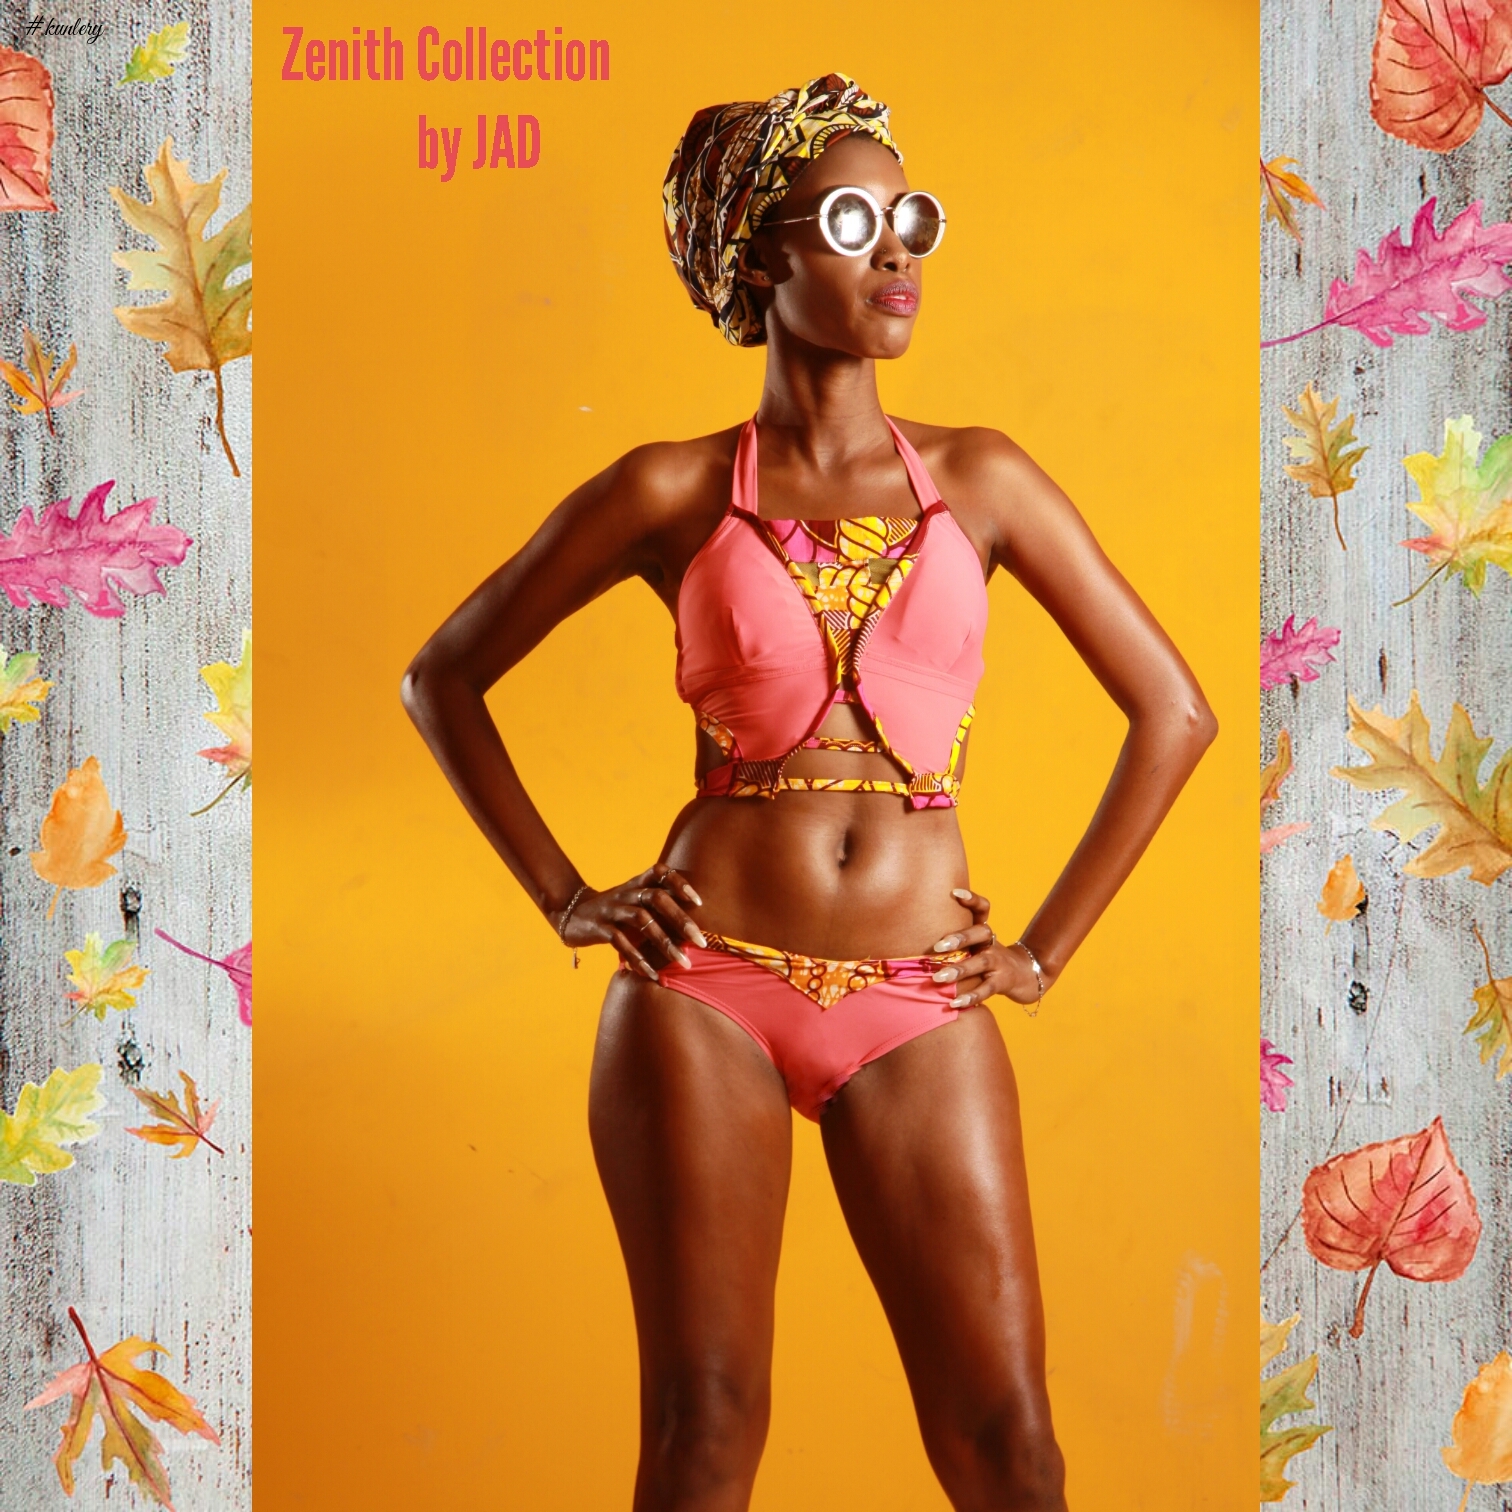 Senegalese Designer Brand JAD Presents The First Part Of It’s Zenith Swimwear Collection